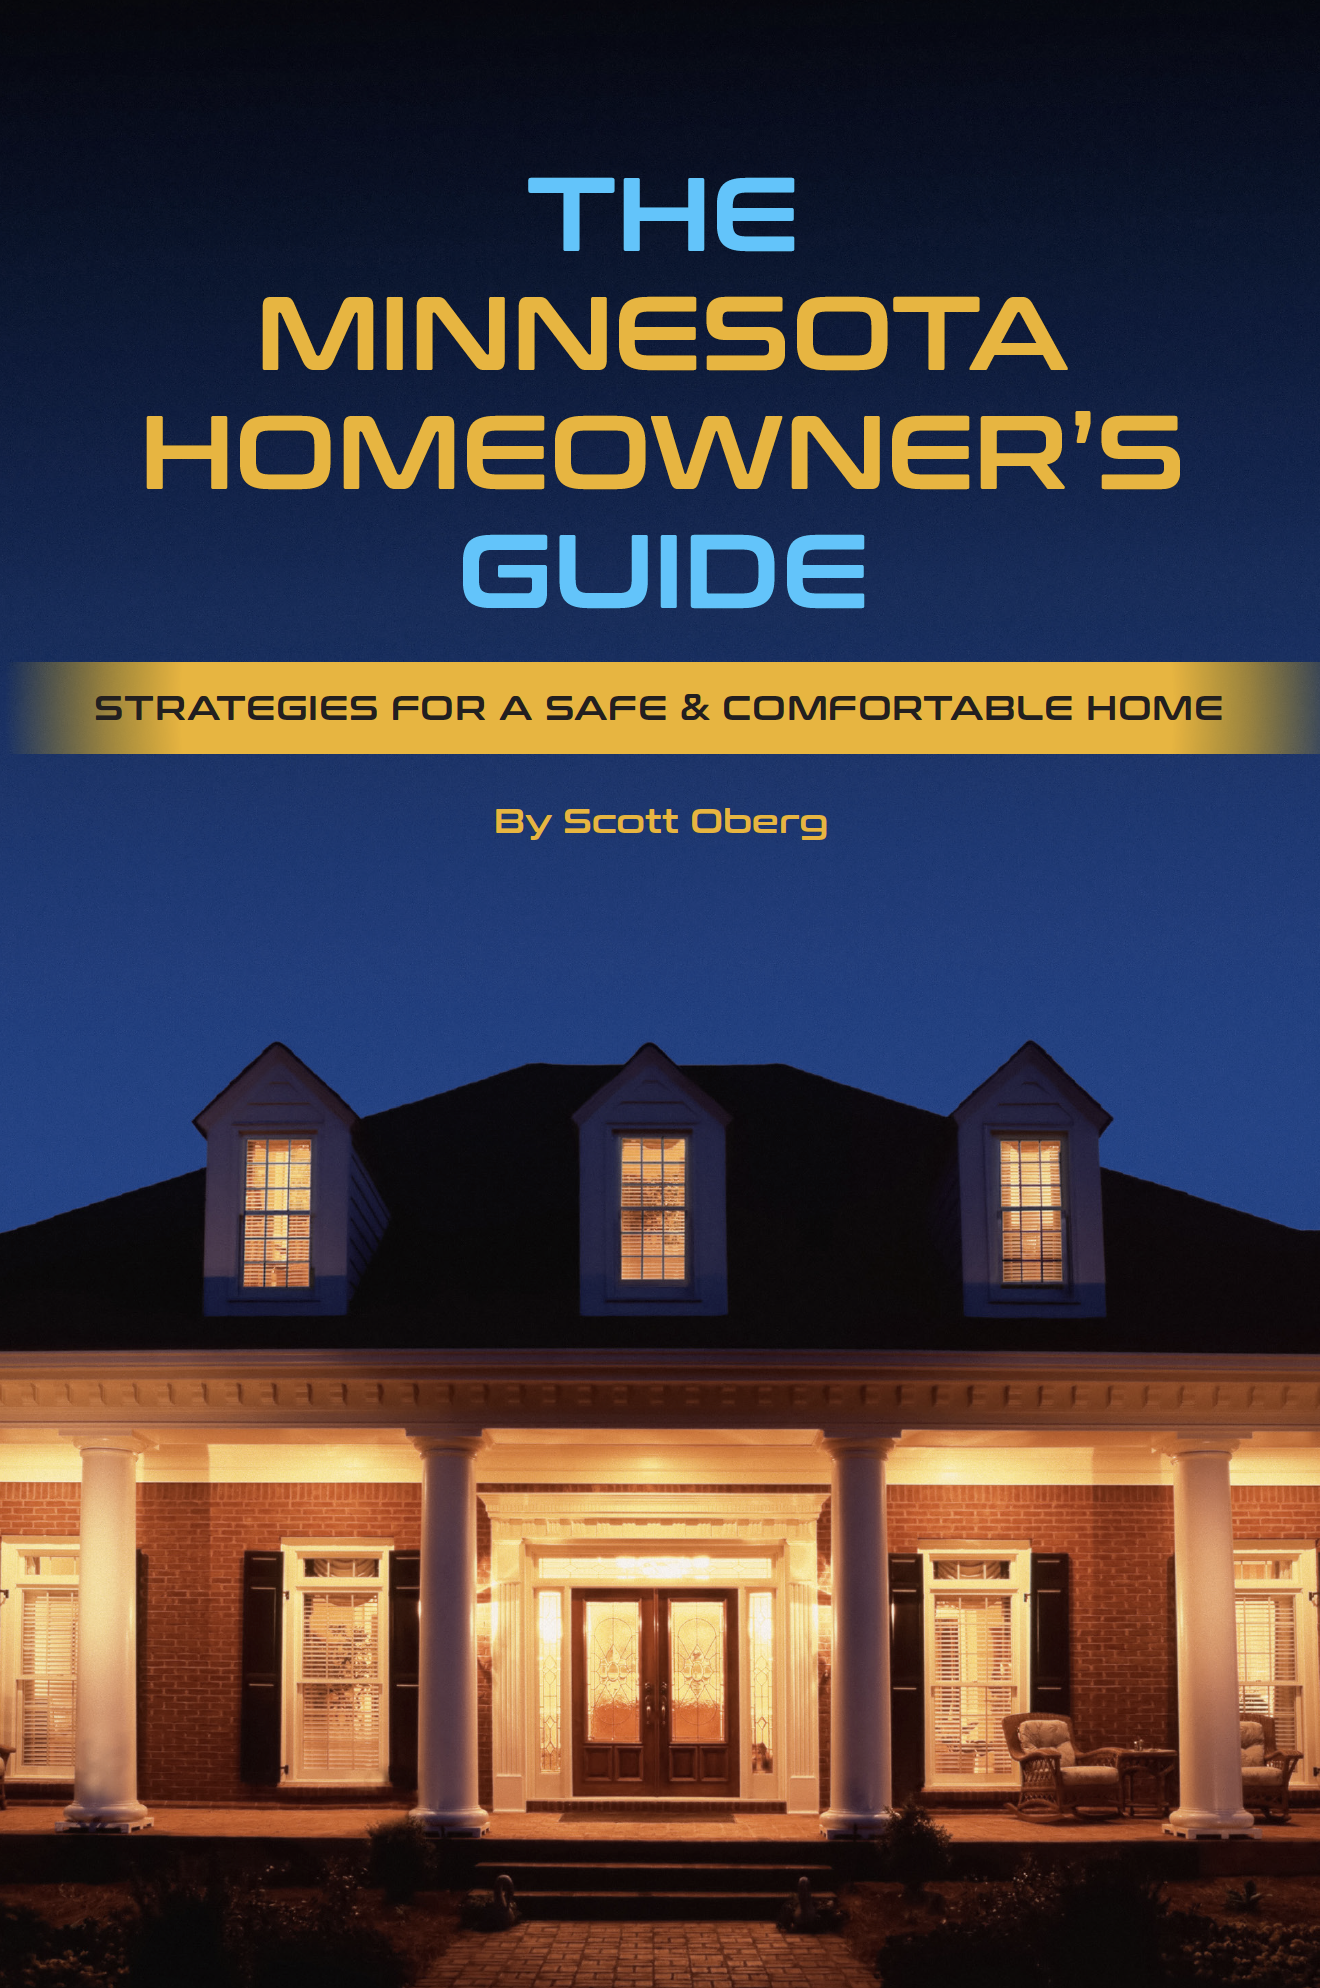 The Minnesota Homeowner's Guide